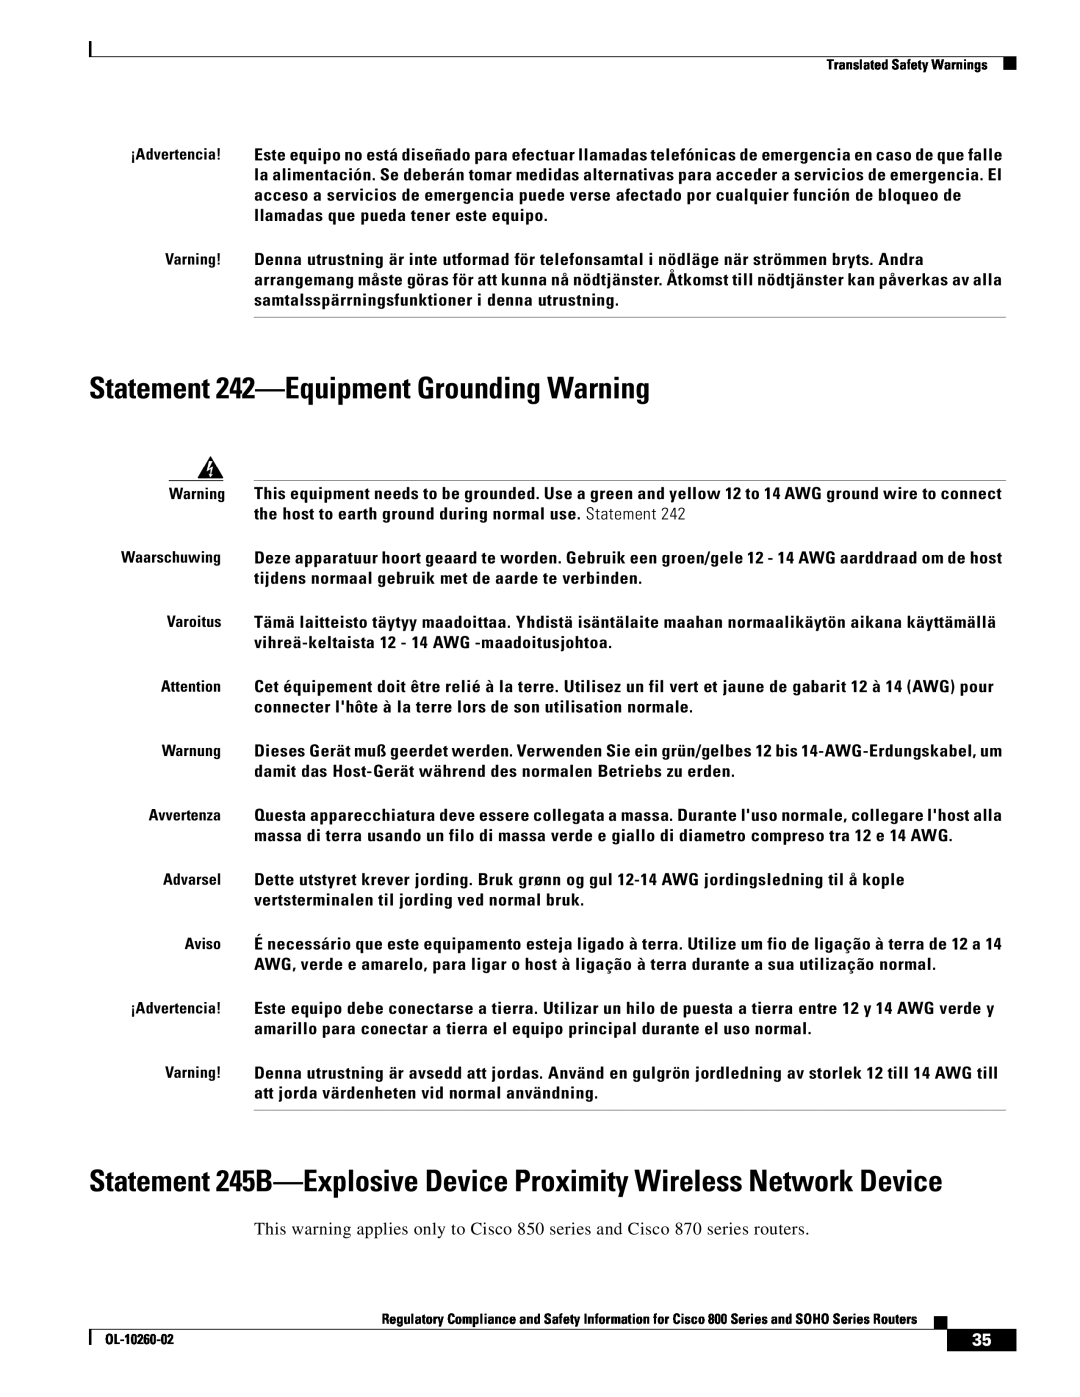 Cisco Systems SOHO Series manual Statement 242-Equipment Grounding Warning 